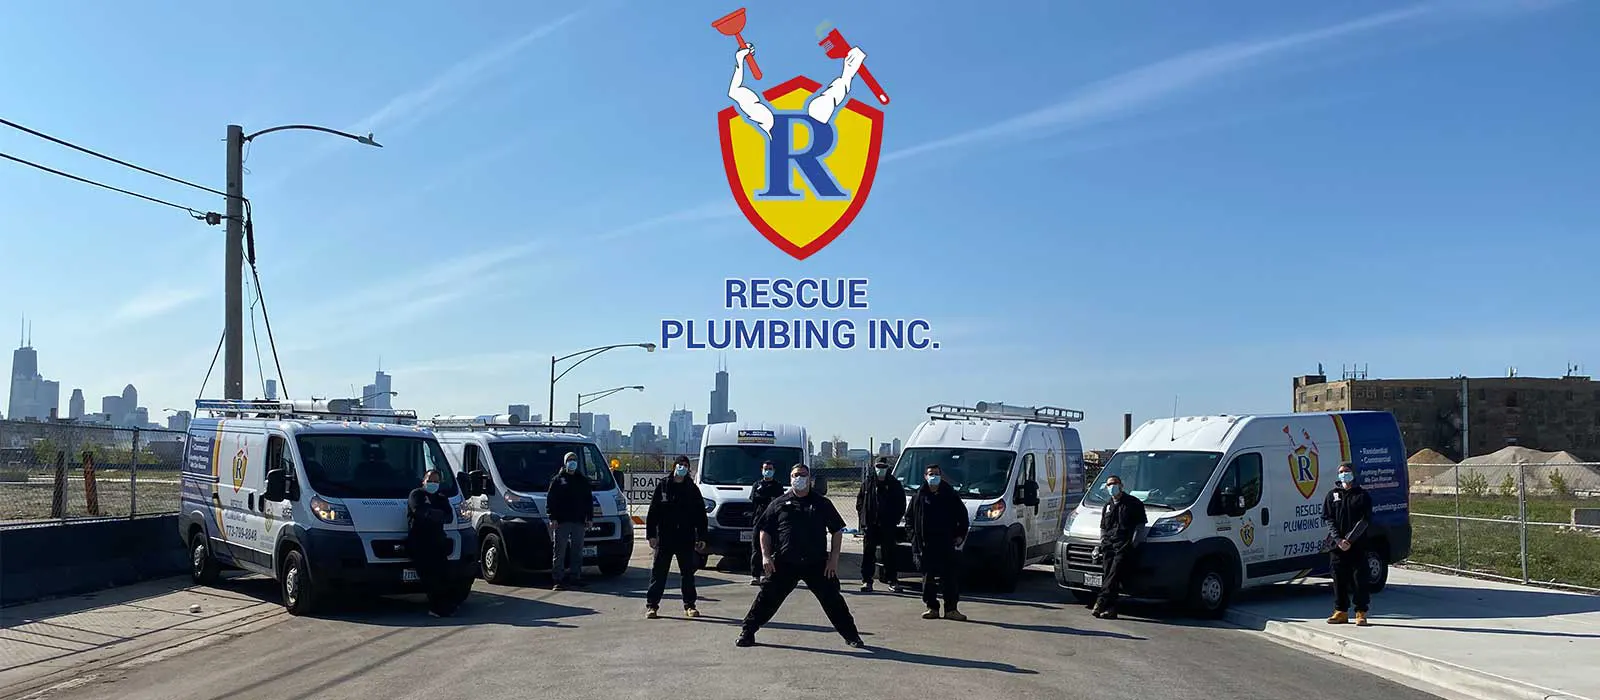 Rescue Plumbing City of Chicago Skyline